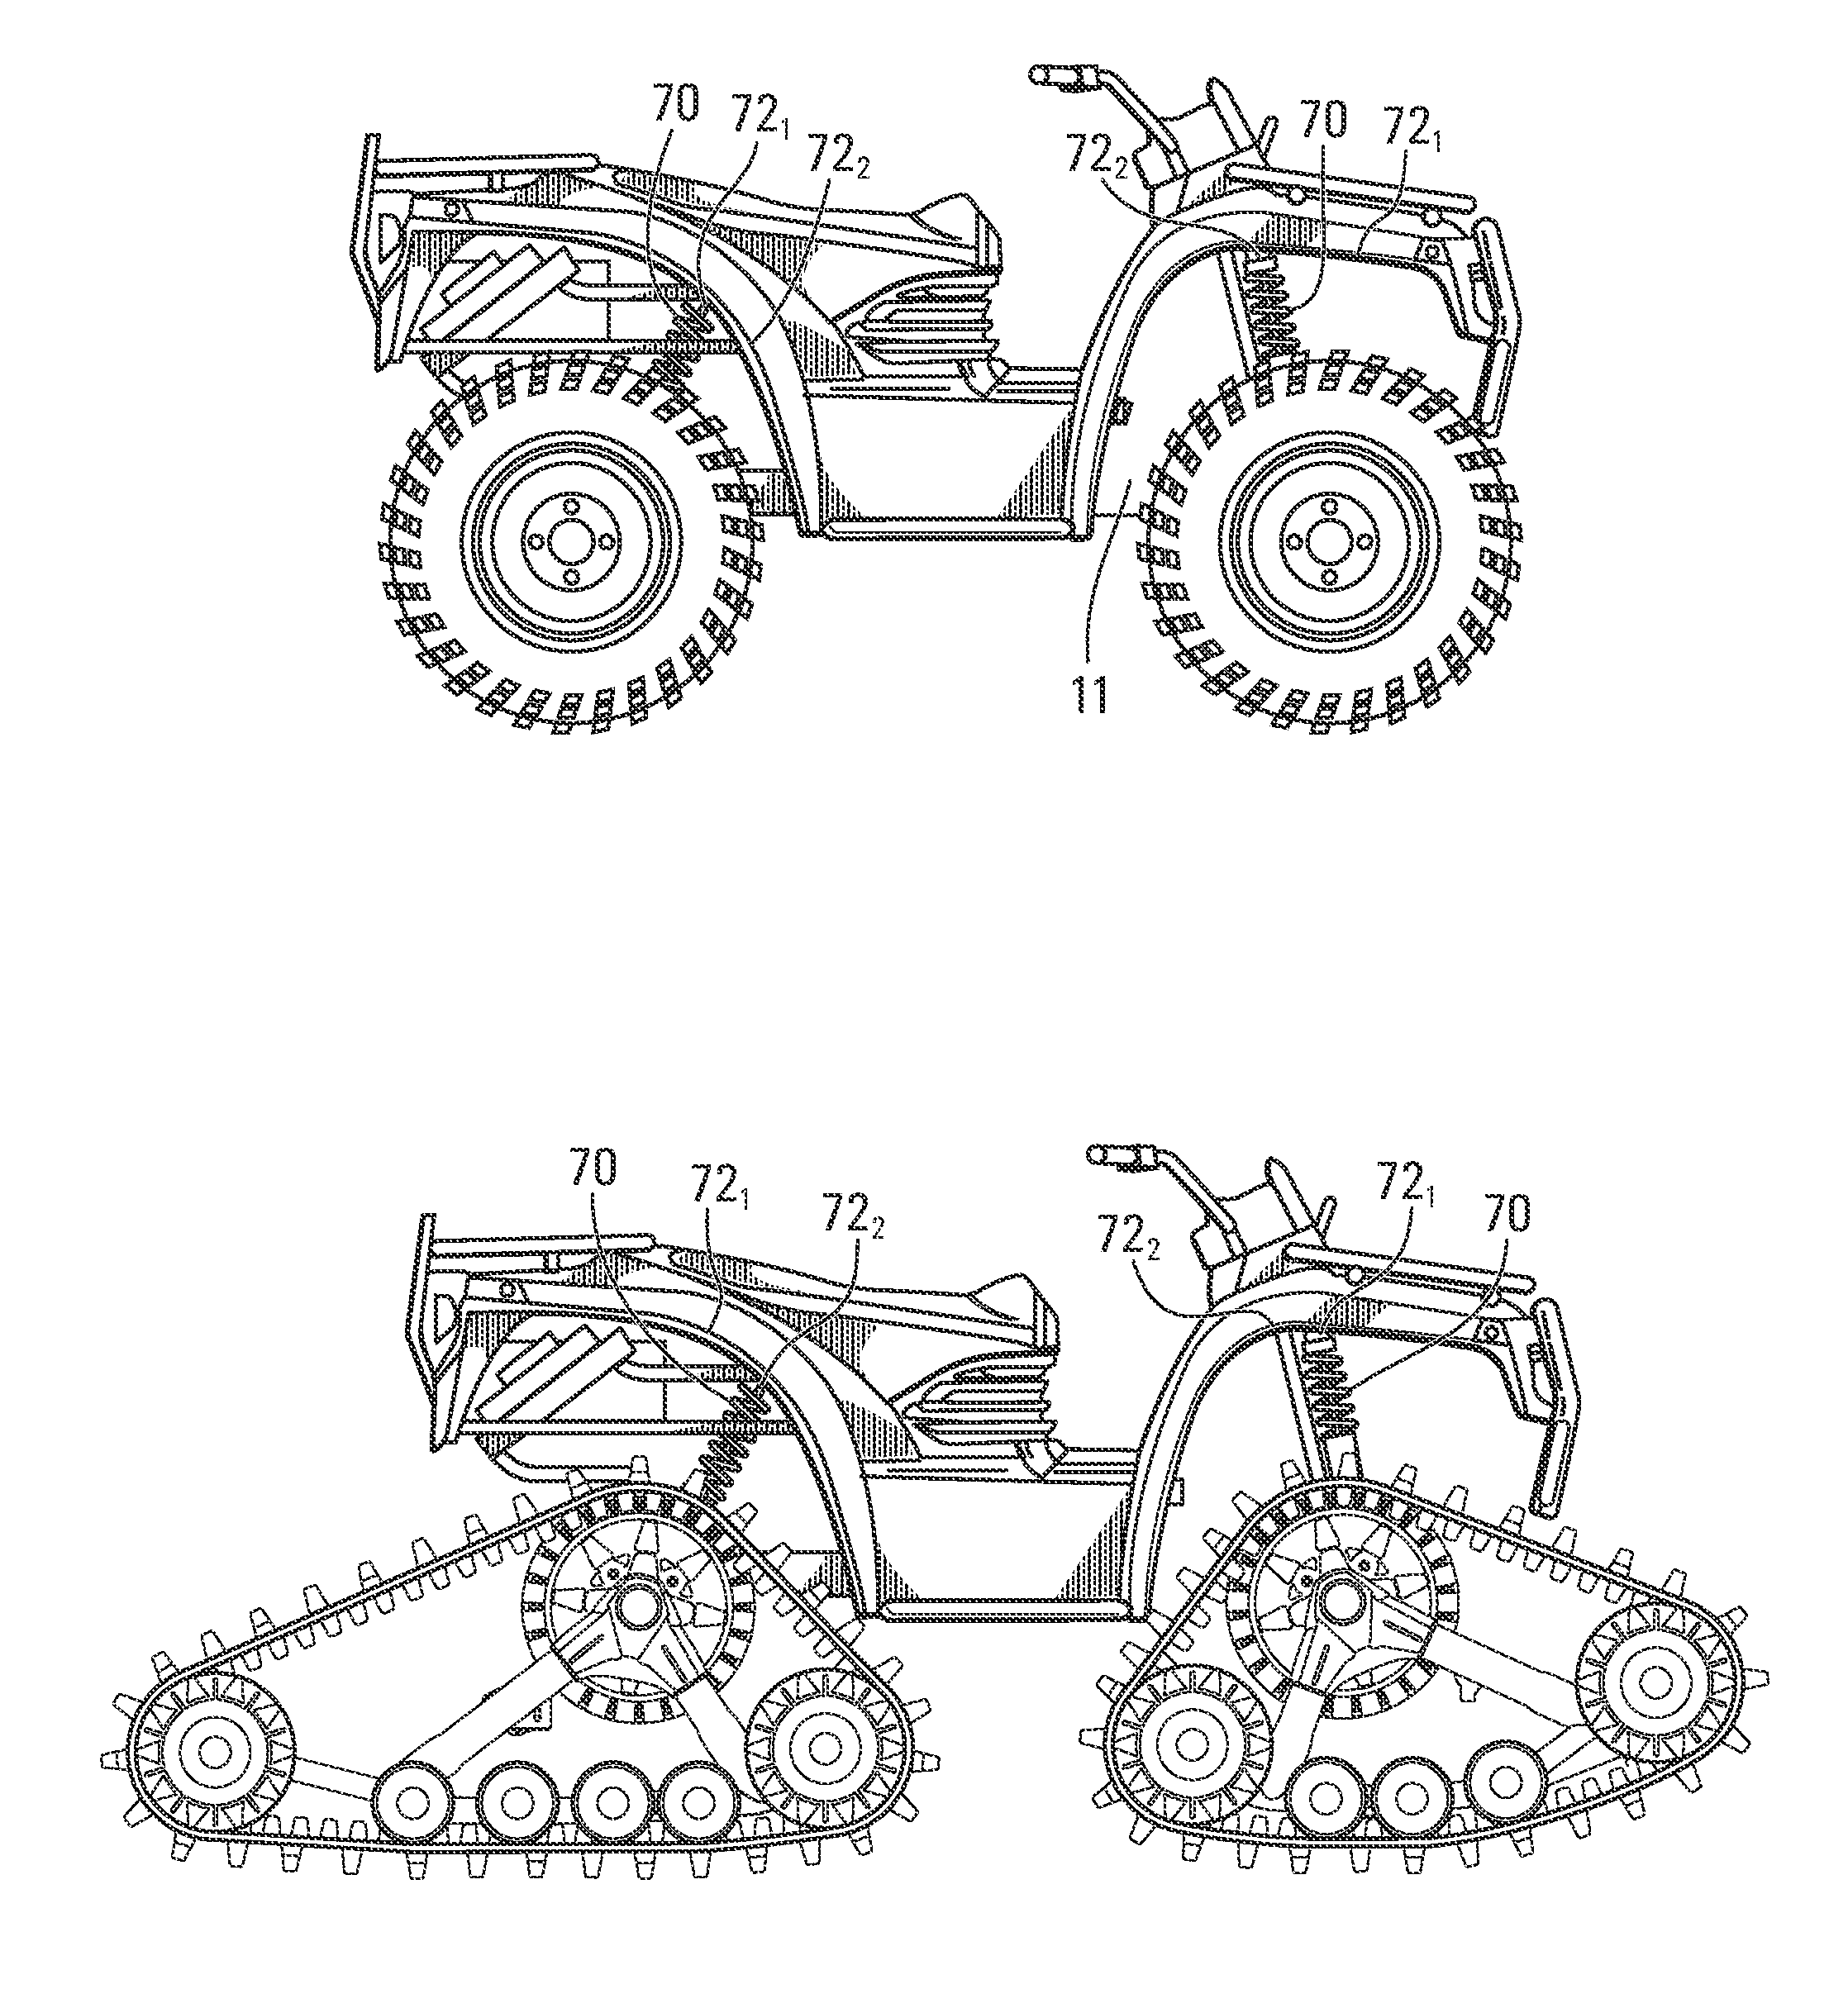 All-terrain vehicle (ATV) propellable on wheels or endless tracks